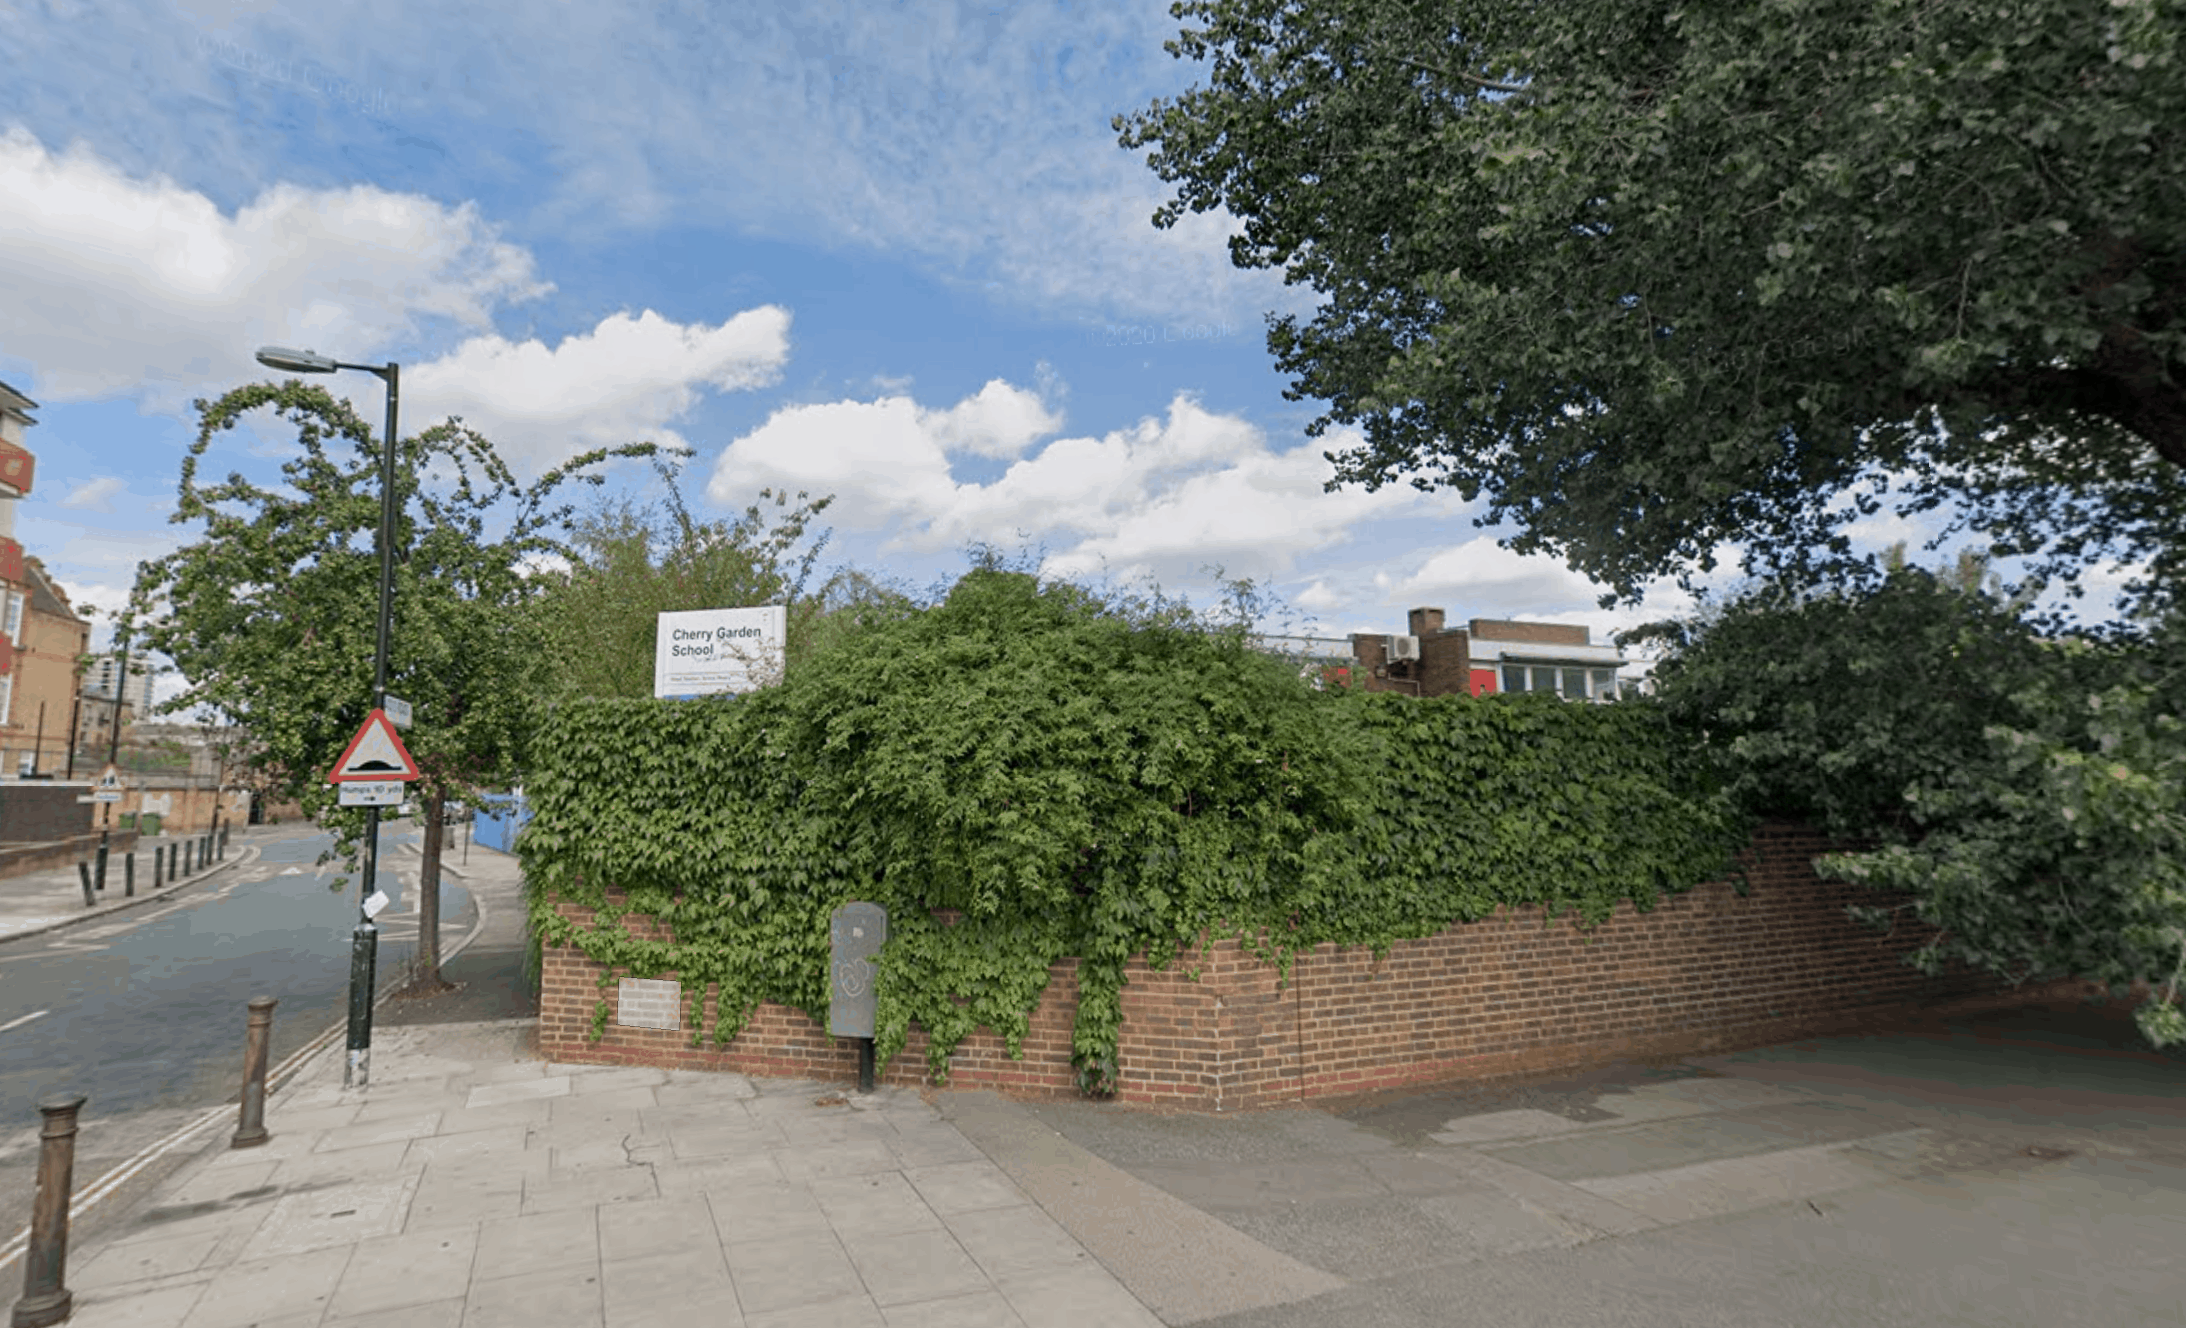 Cherry Gardens school site